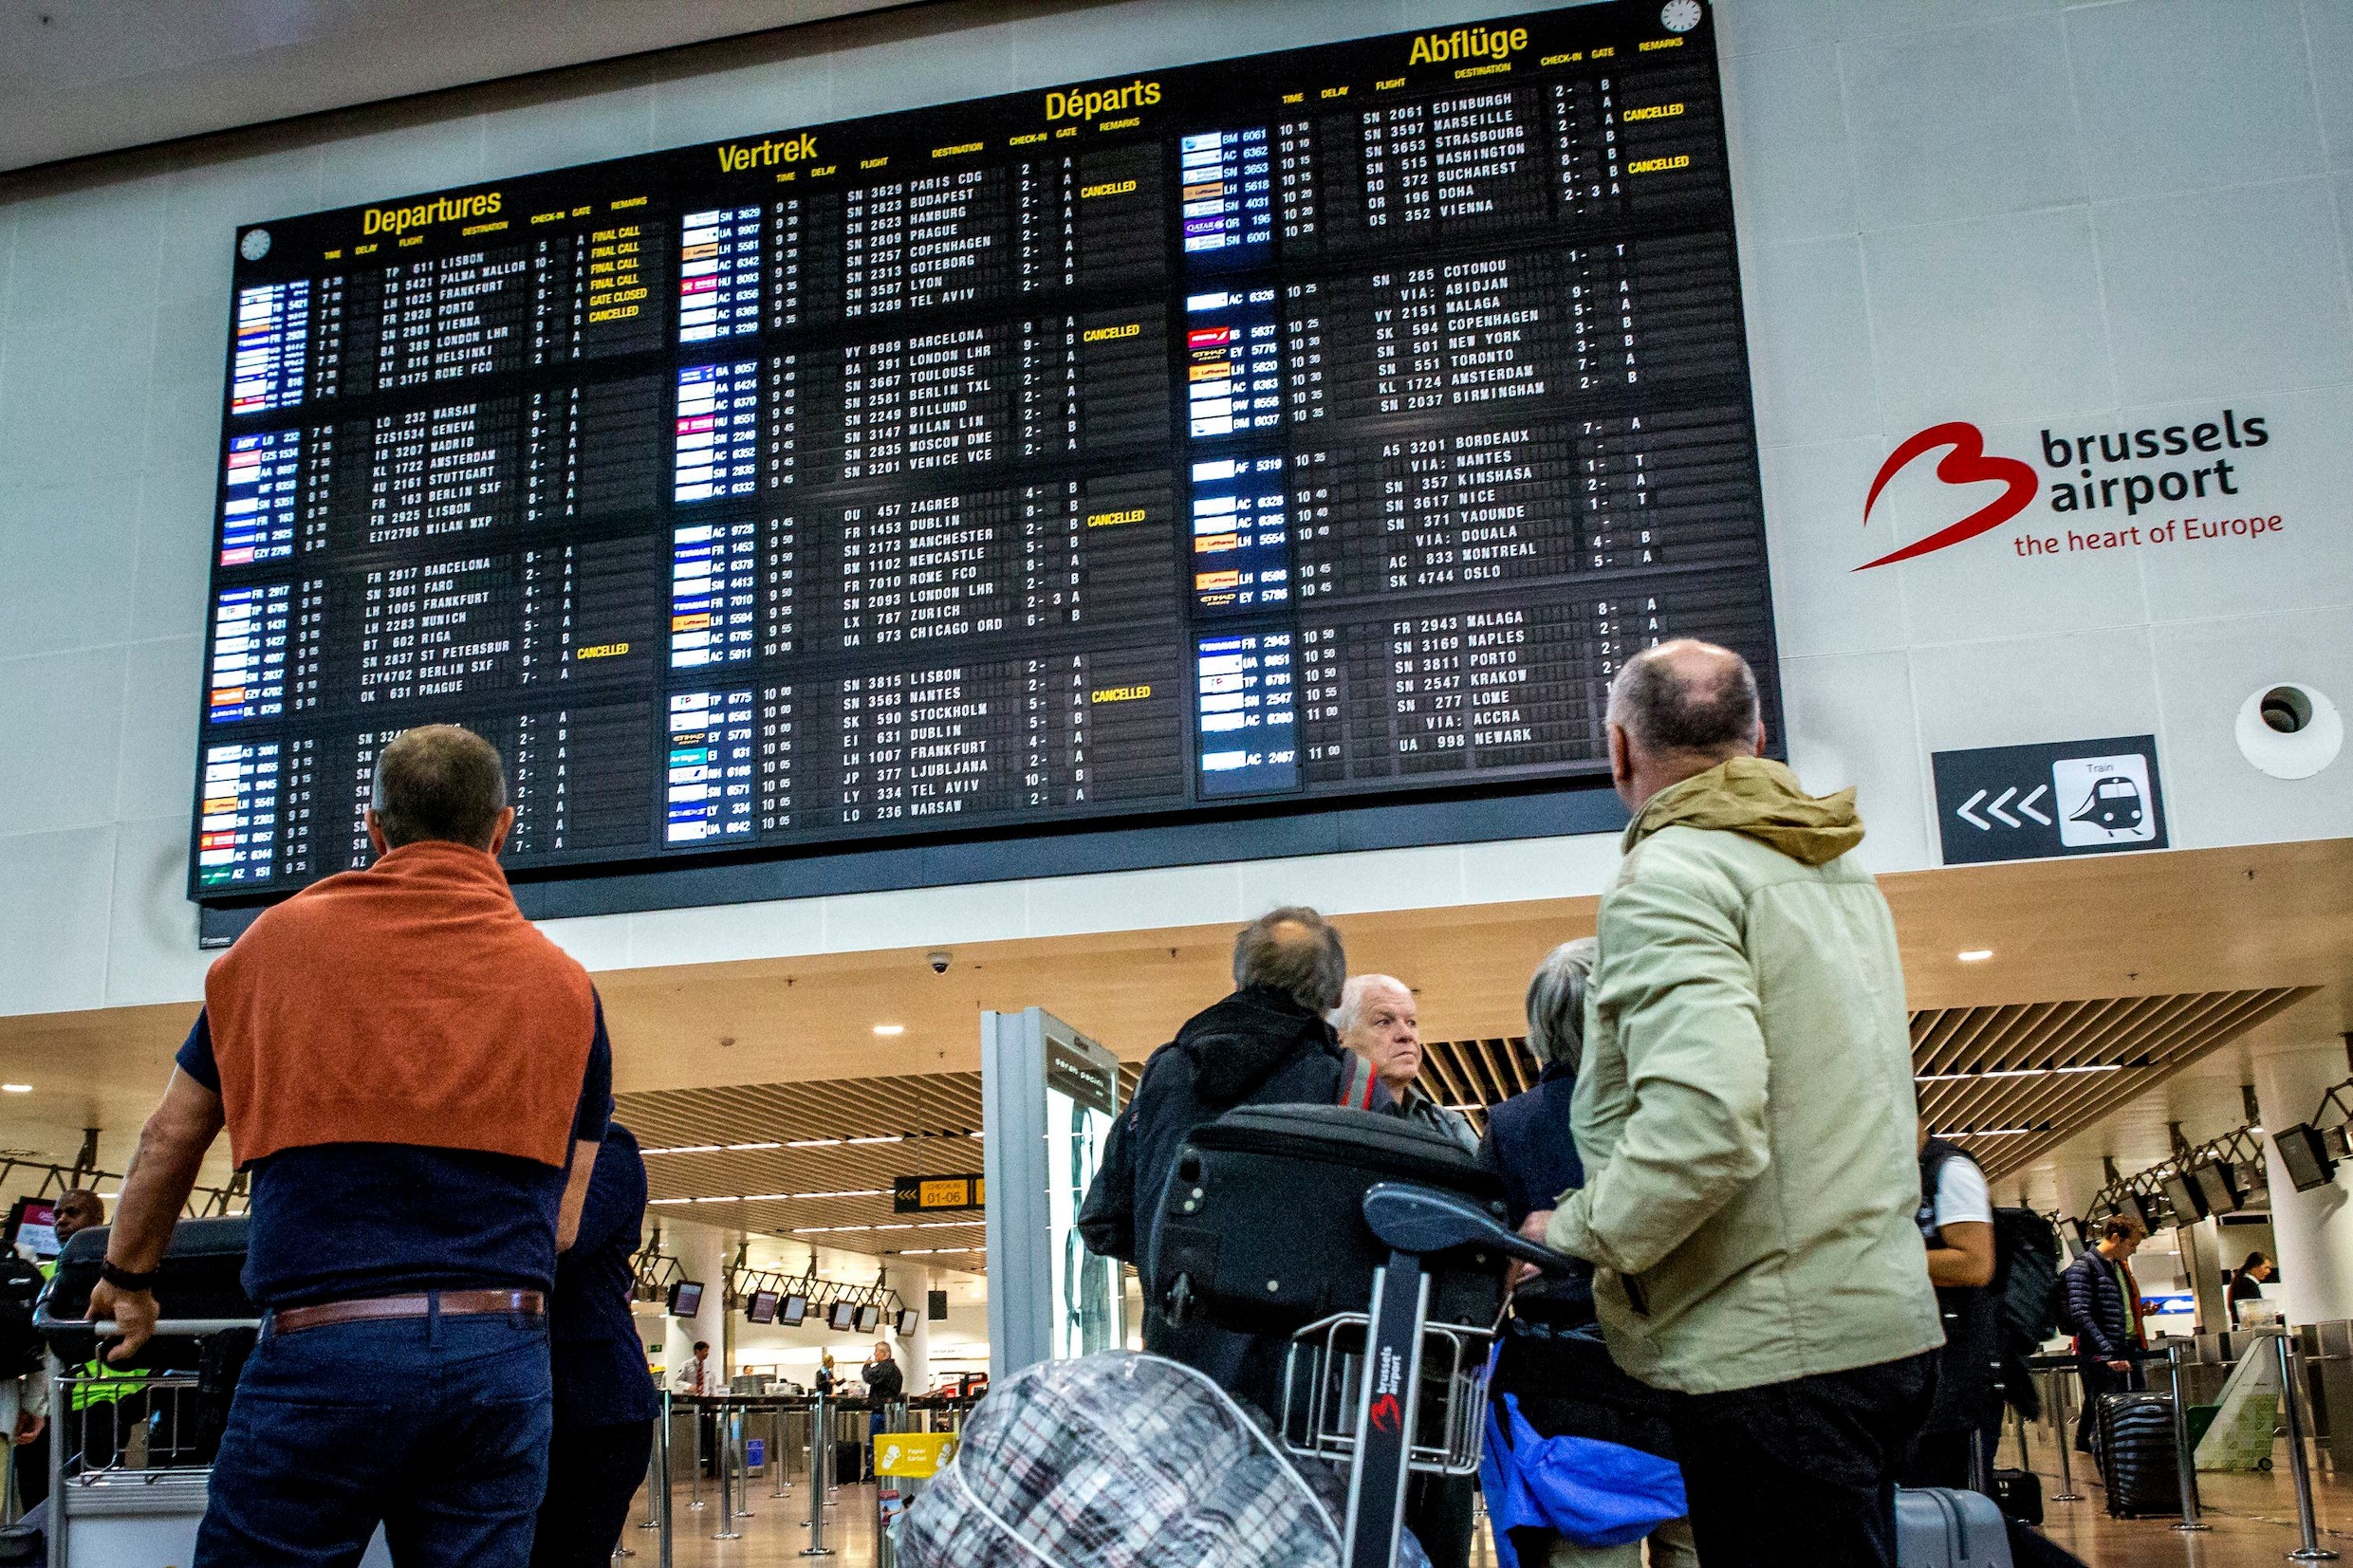 Brussels Airport ontving ruim 2,2 miljoen reizigers in september